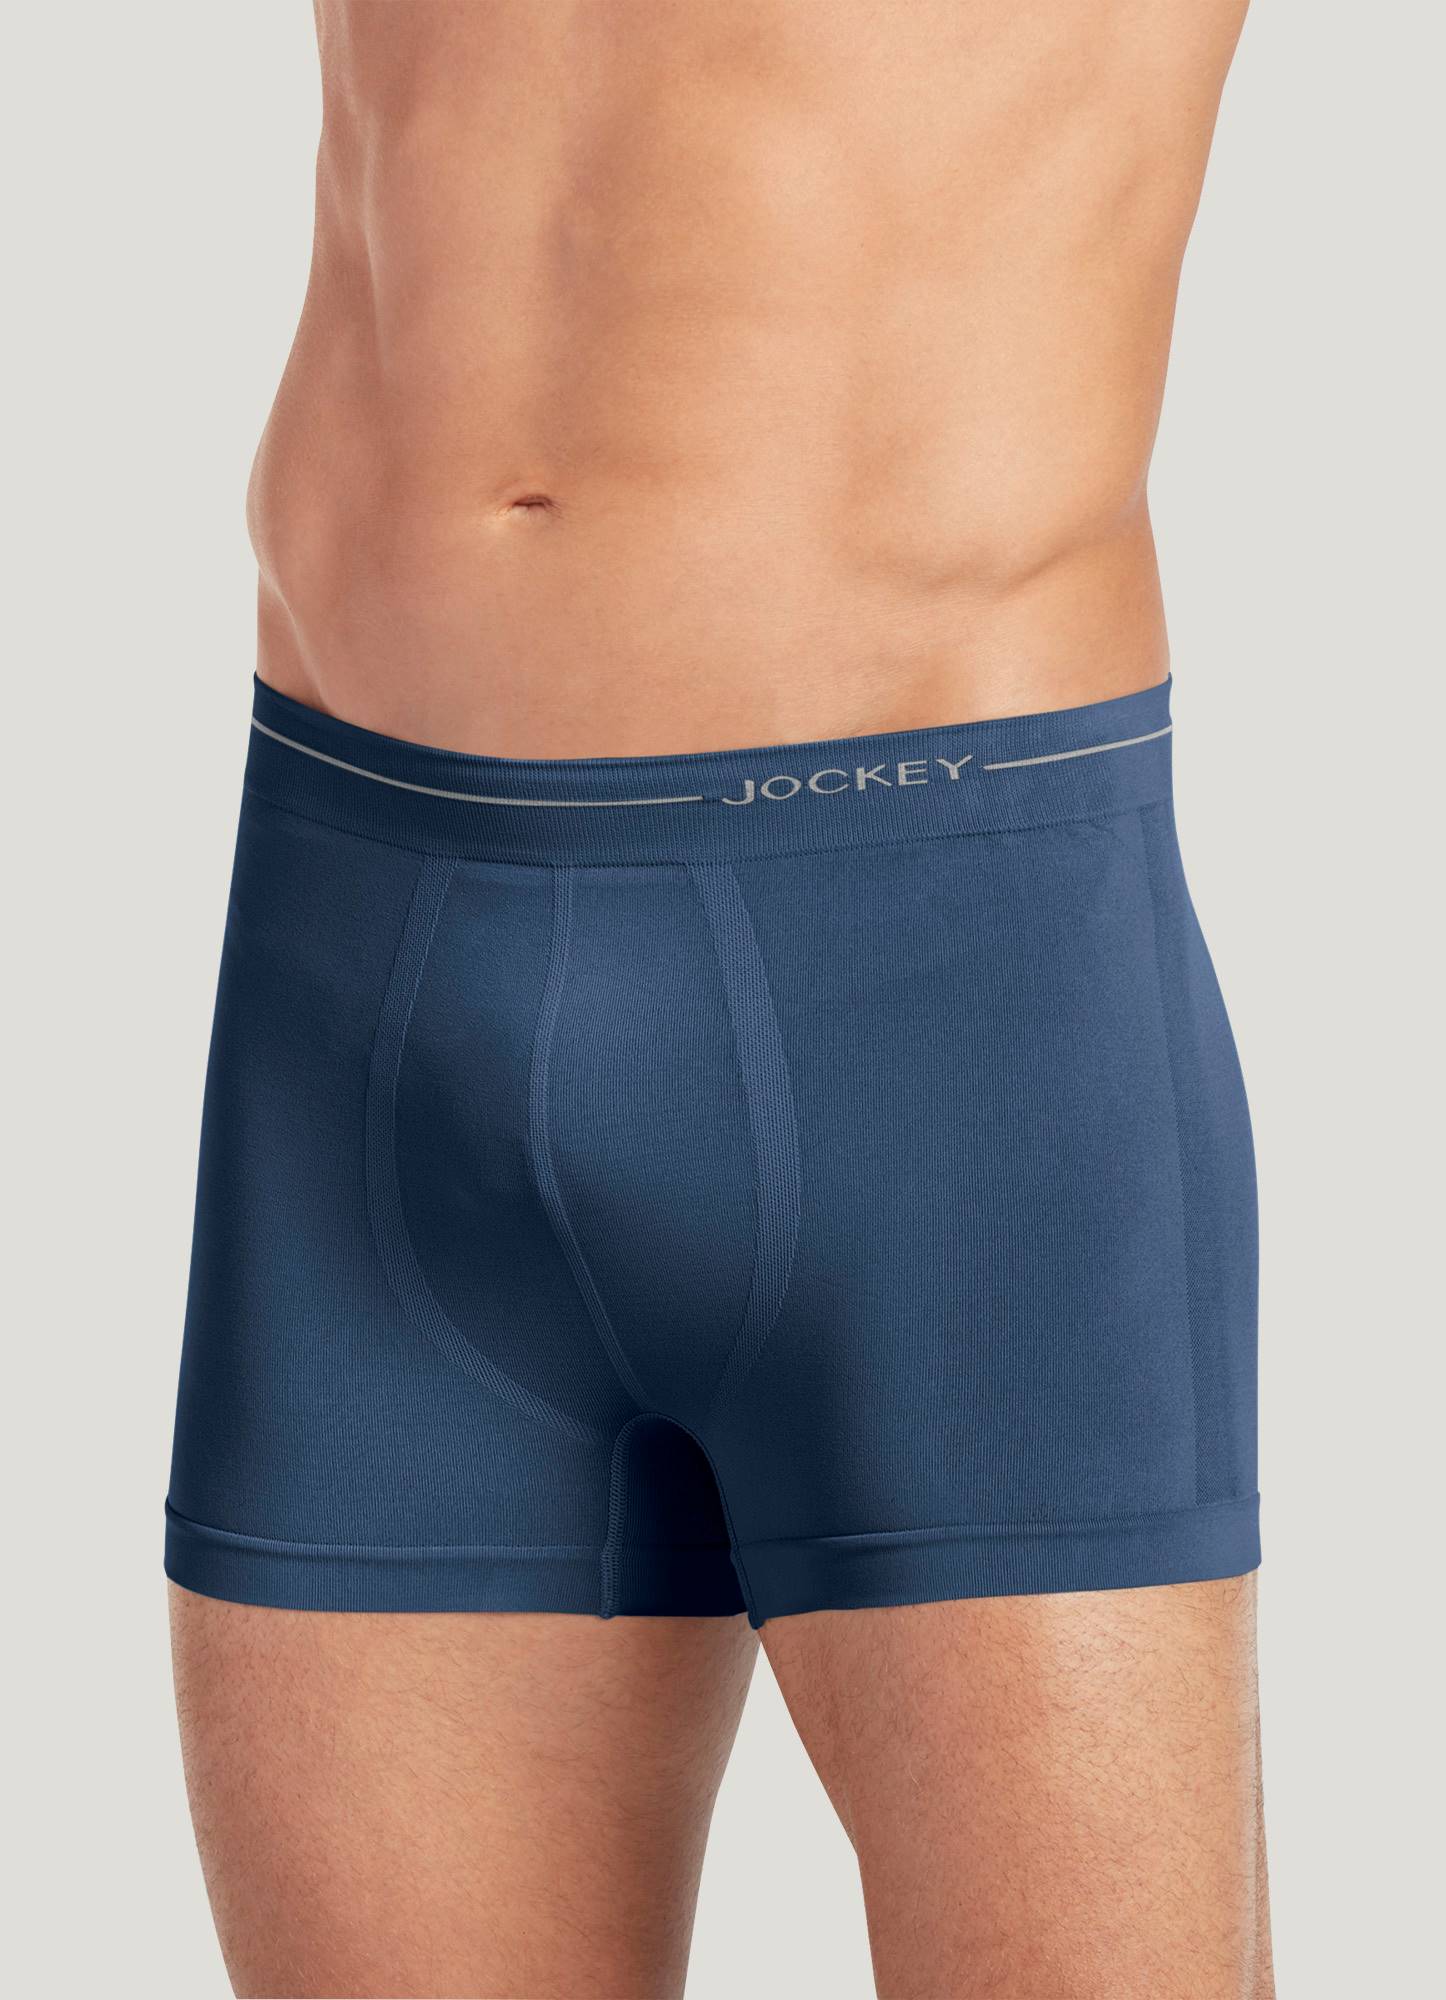 Soft jockey seamless mens underwear For Comfort 